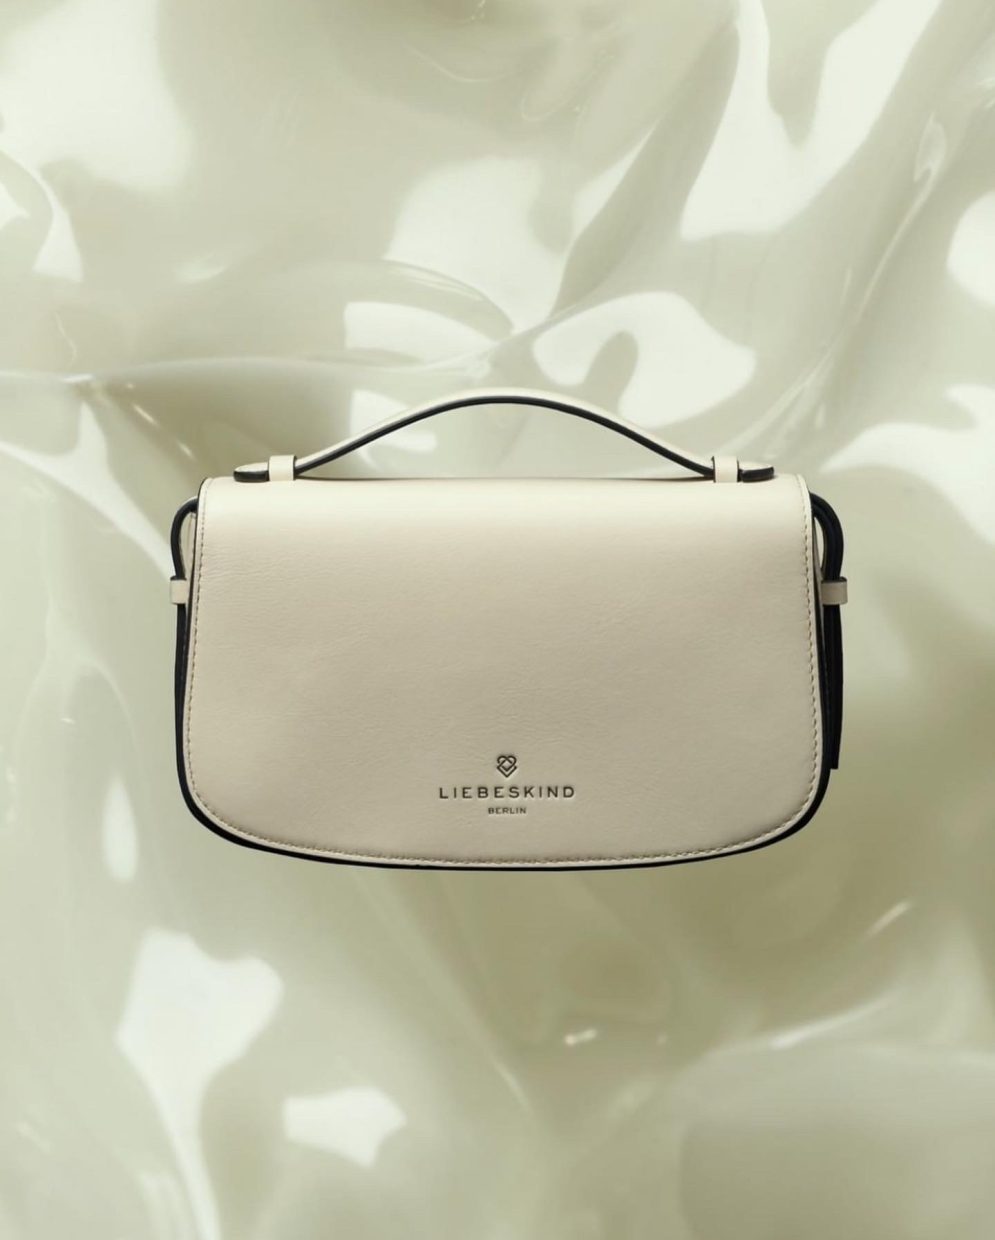 white leather handbag by Liebeskind on milky plexiglass background